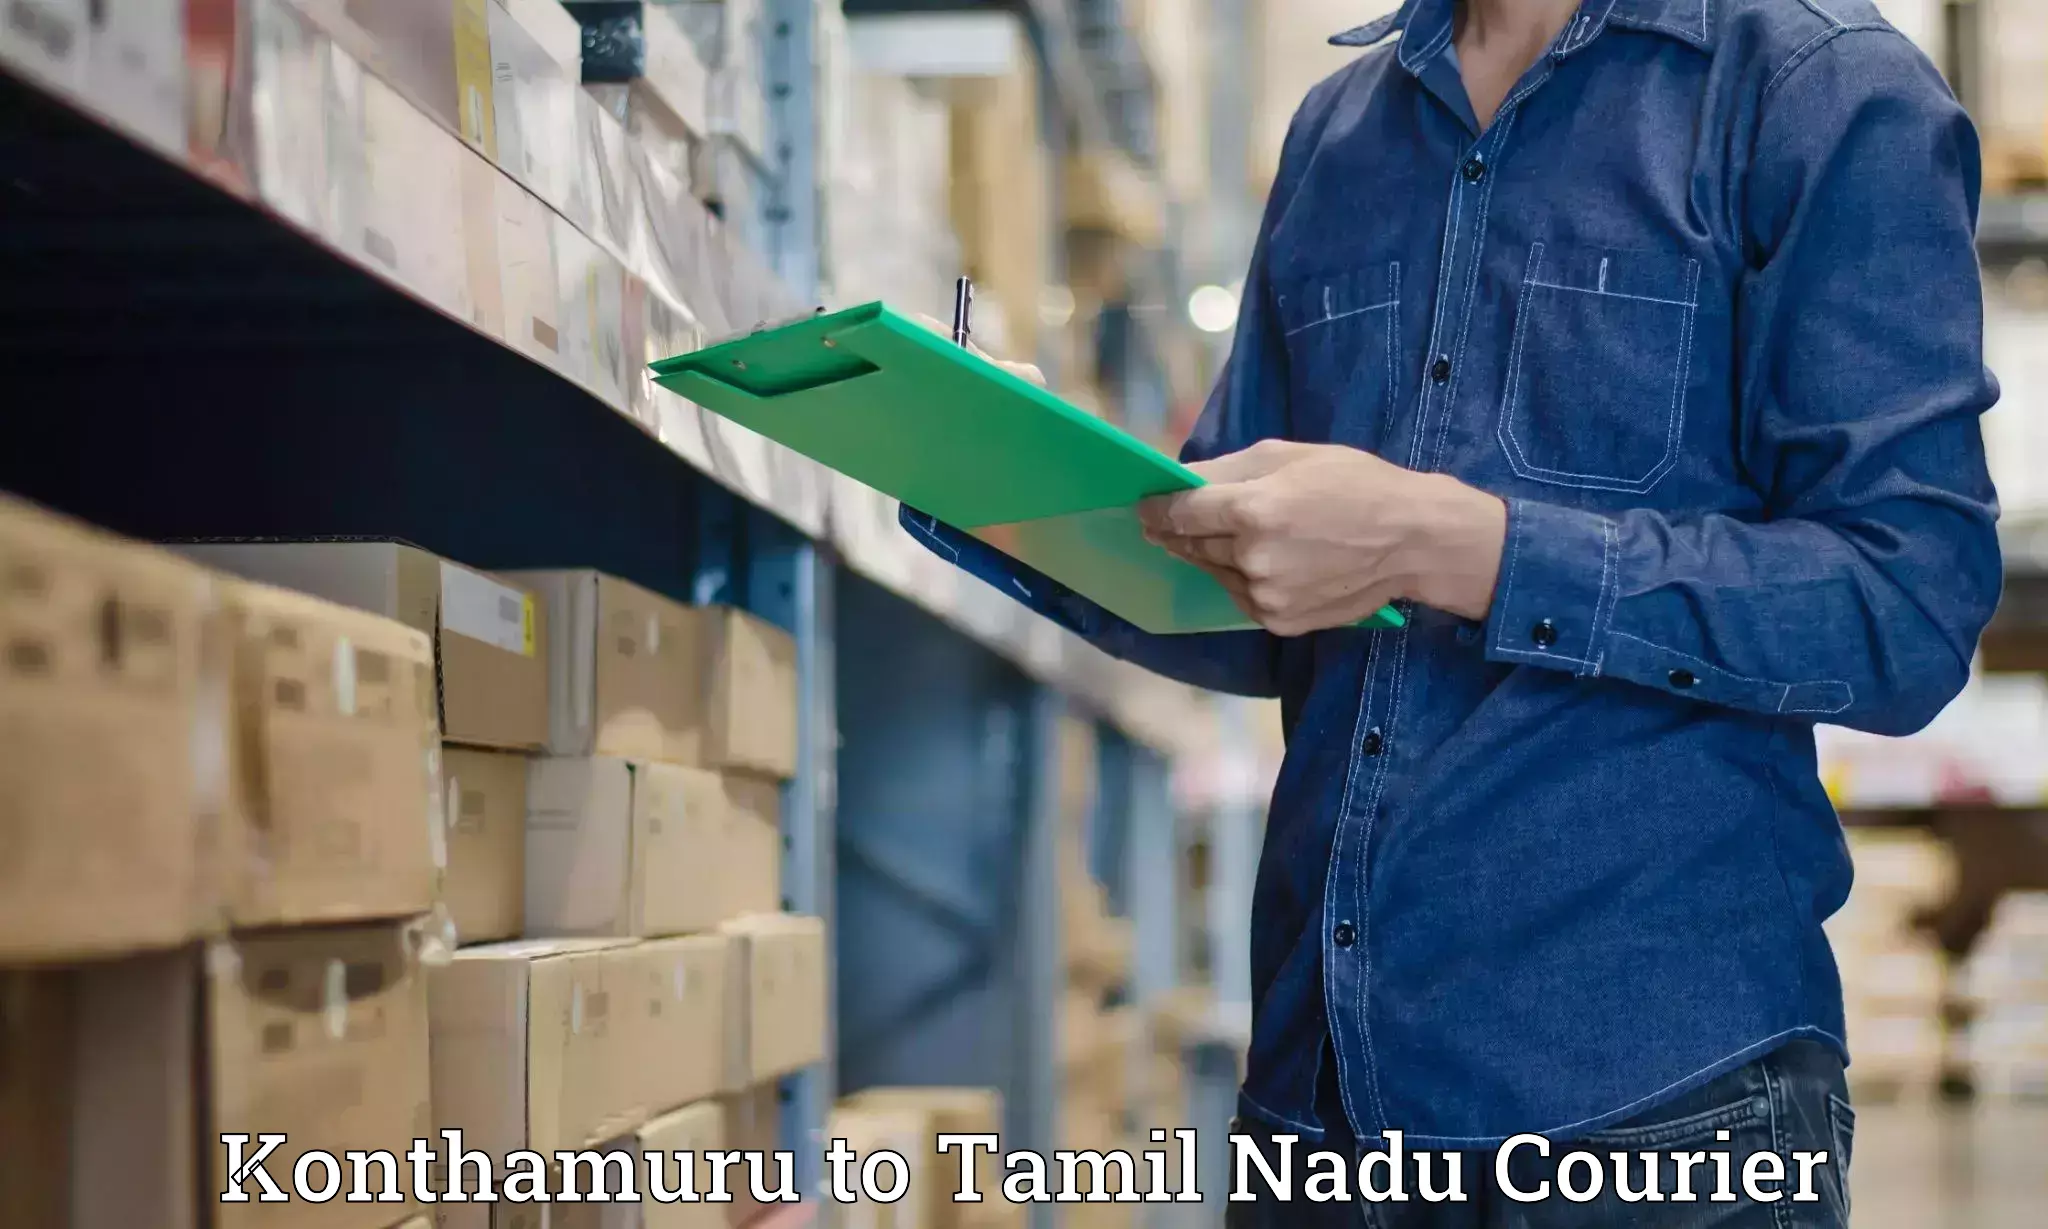 Reliable delivery network Konthamuru to Thiruvarur